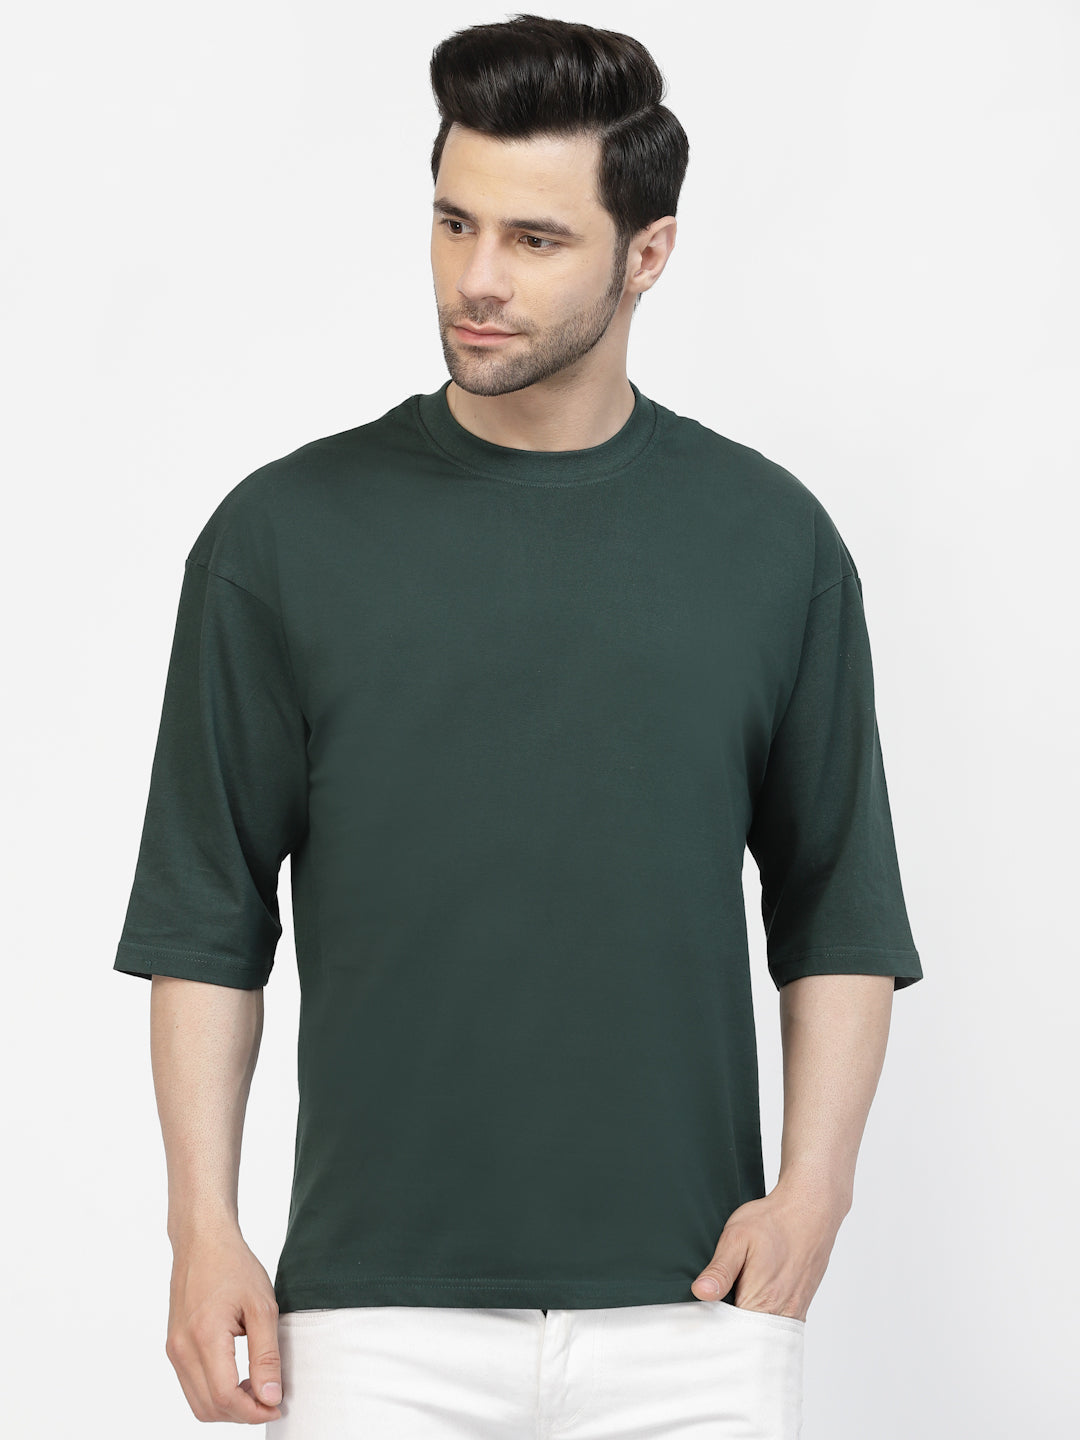 Bottle Green Oversized Drop Shoulder Unisex Tshirt By Gavin Paris